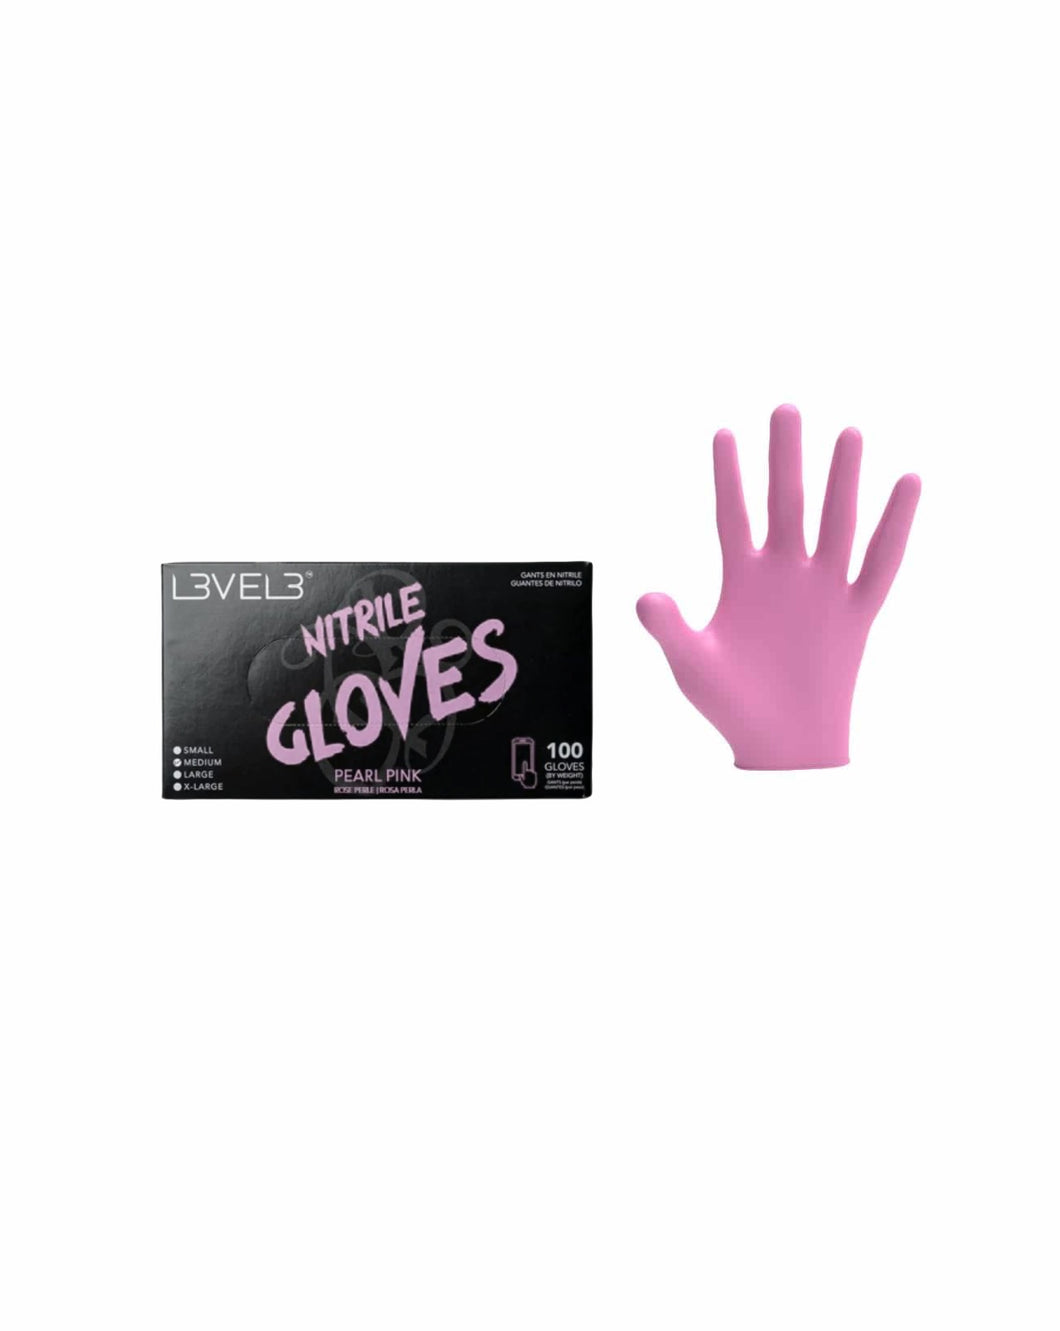 L3vel3 Nitrile Gloves Pearl Pink 100ct